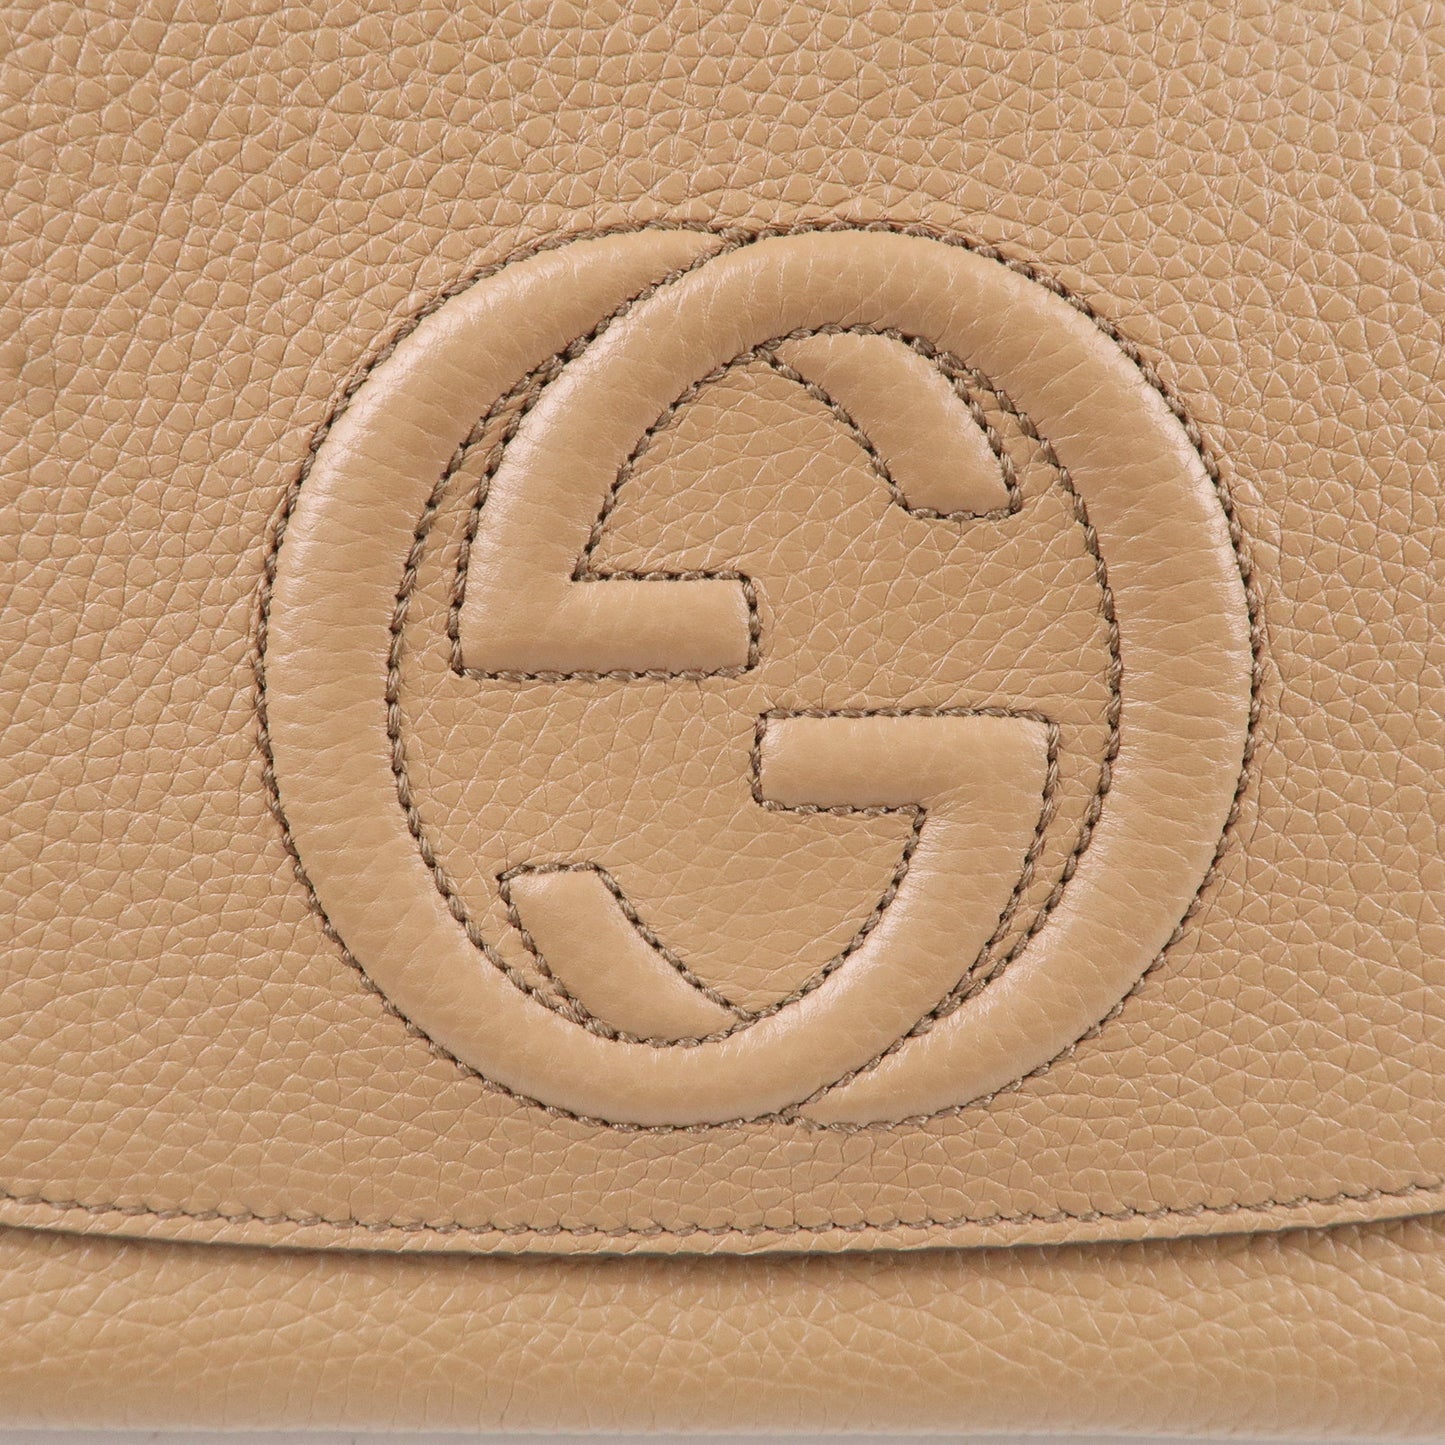 GUCCI SOHO Leather Chain Shoulder Bag Crossbody Bag Beige 536224